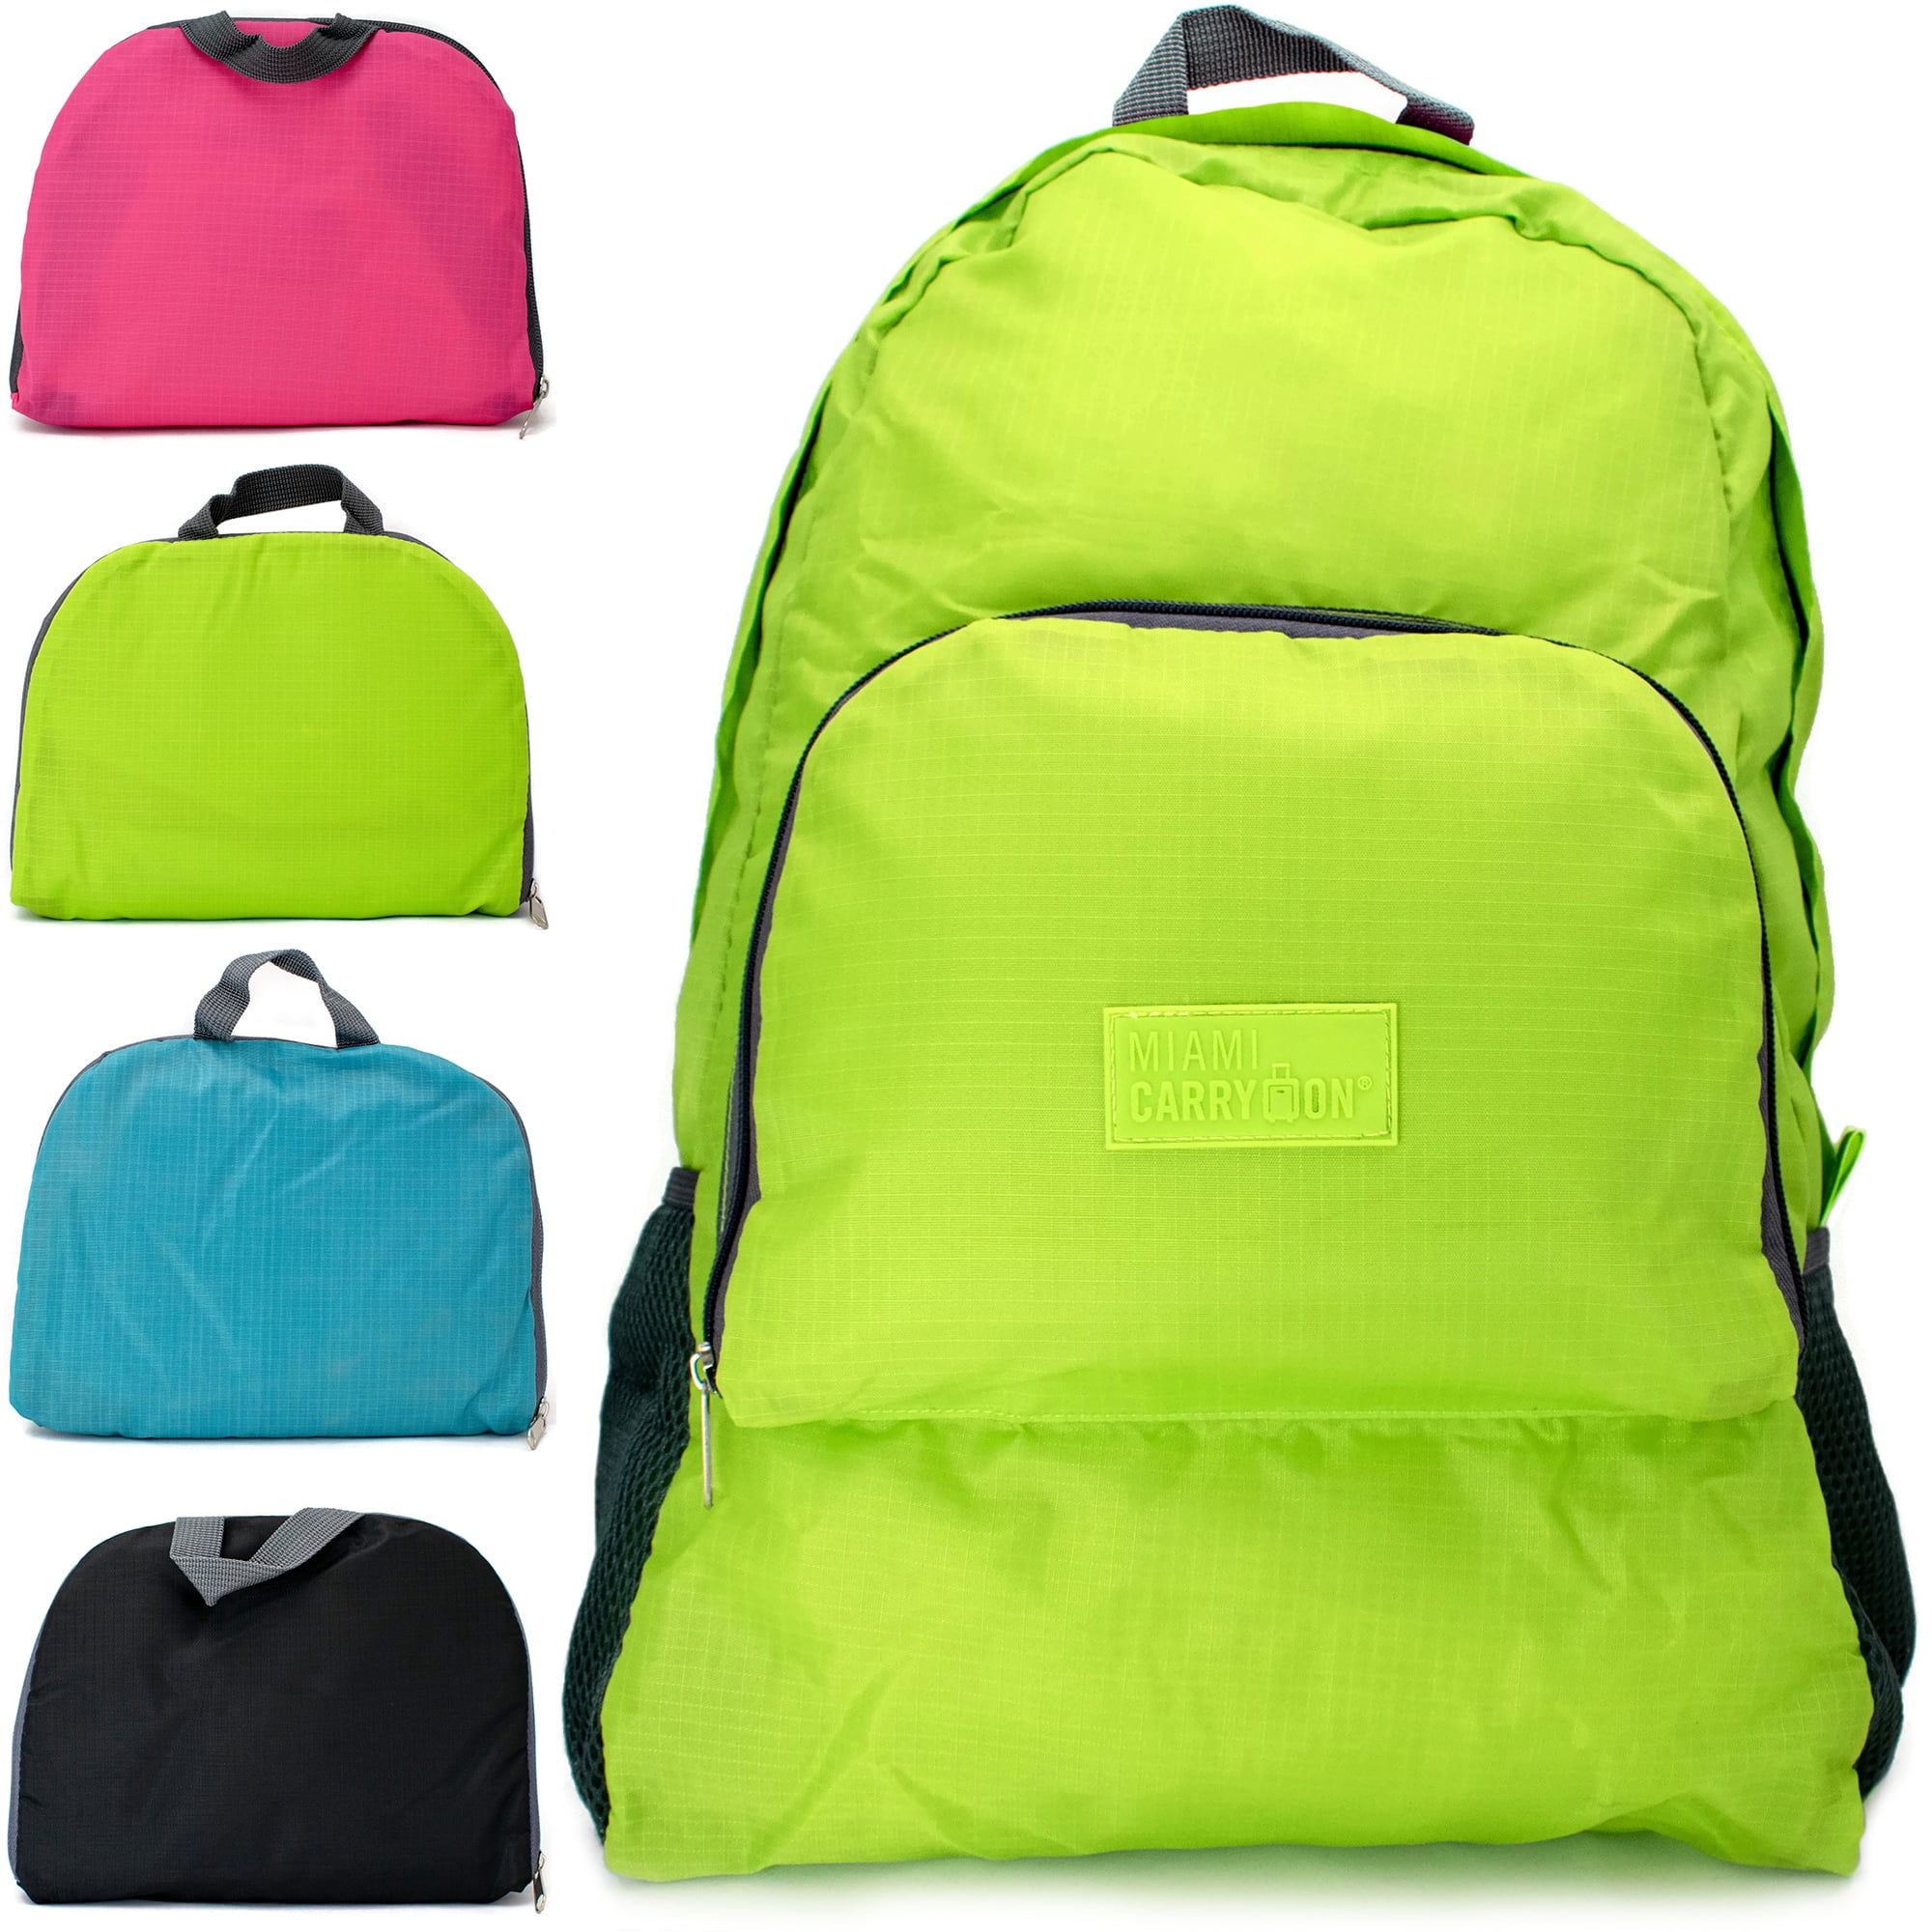 Miami Carryon - Foldable Backpack, Green - Walmart.com - Walmart.com